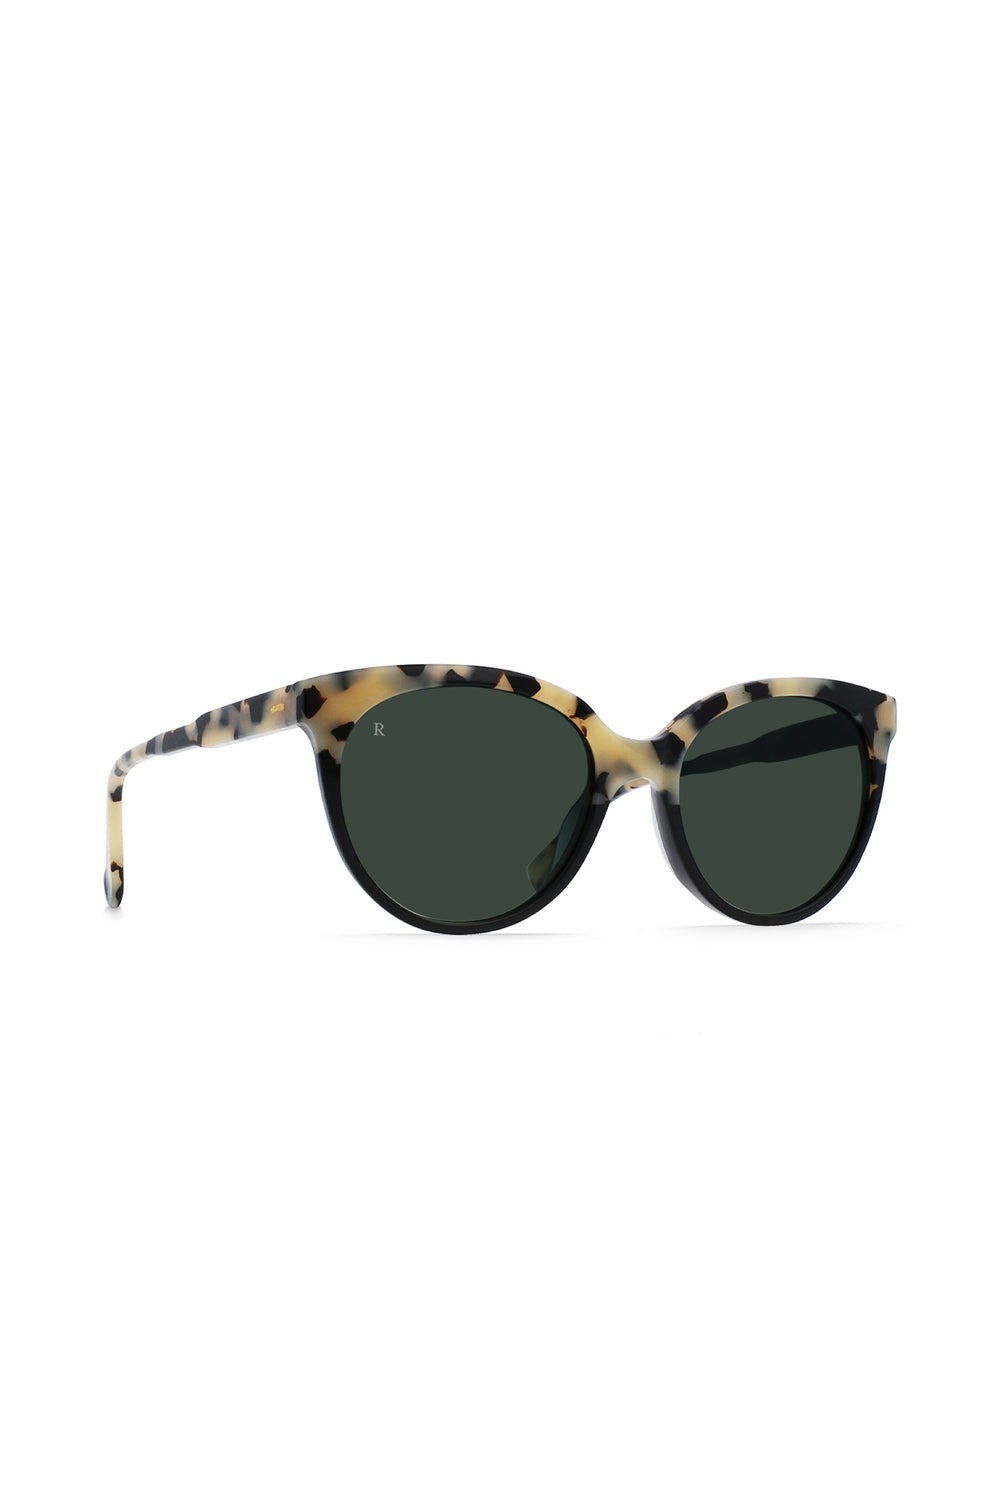 Chai Tortoise Lily Sunglasses